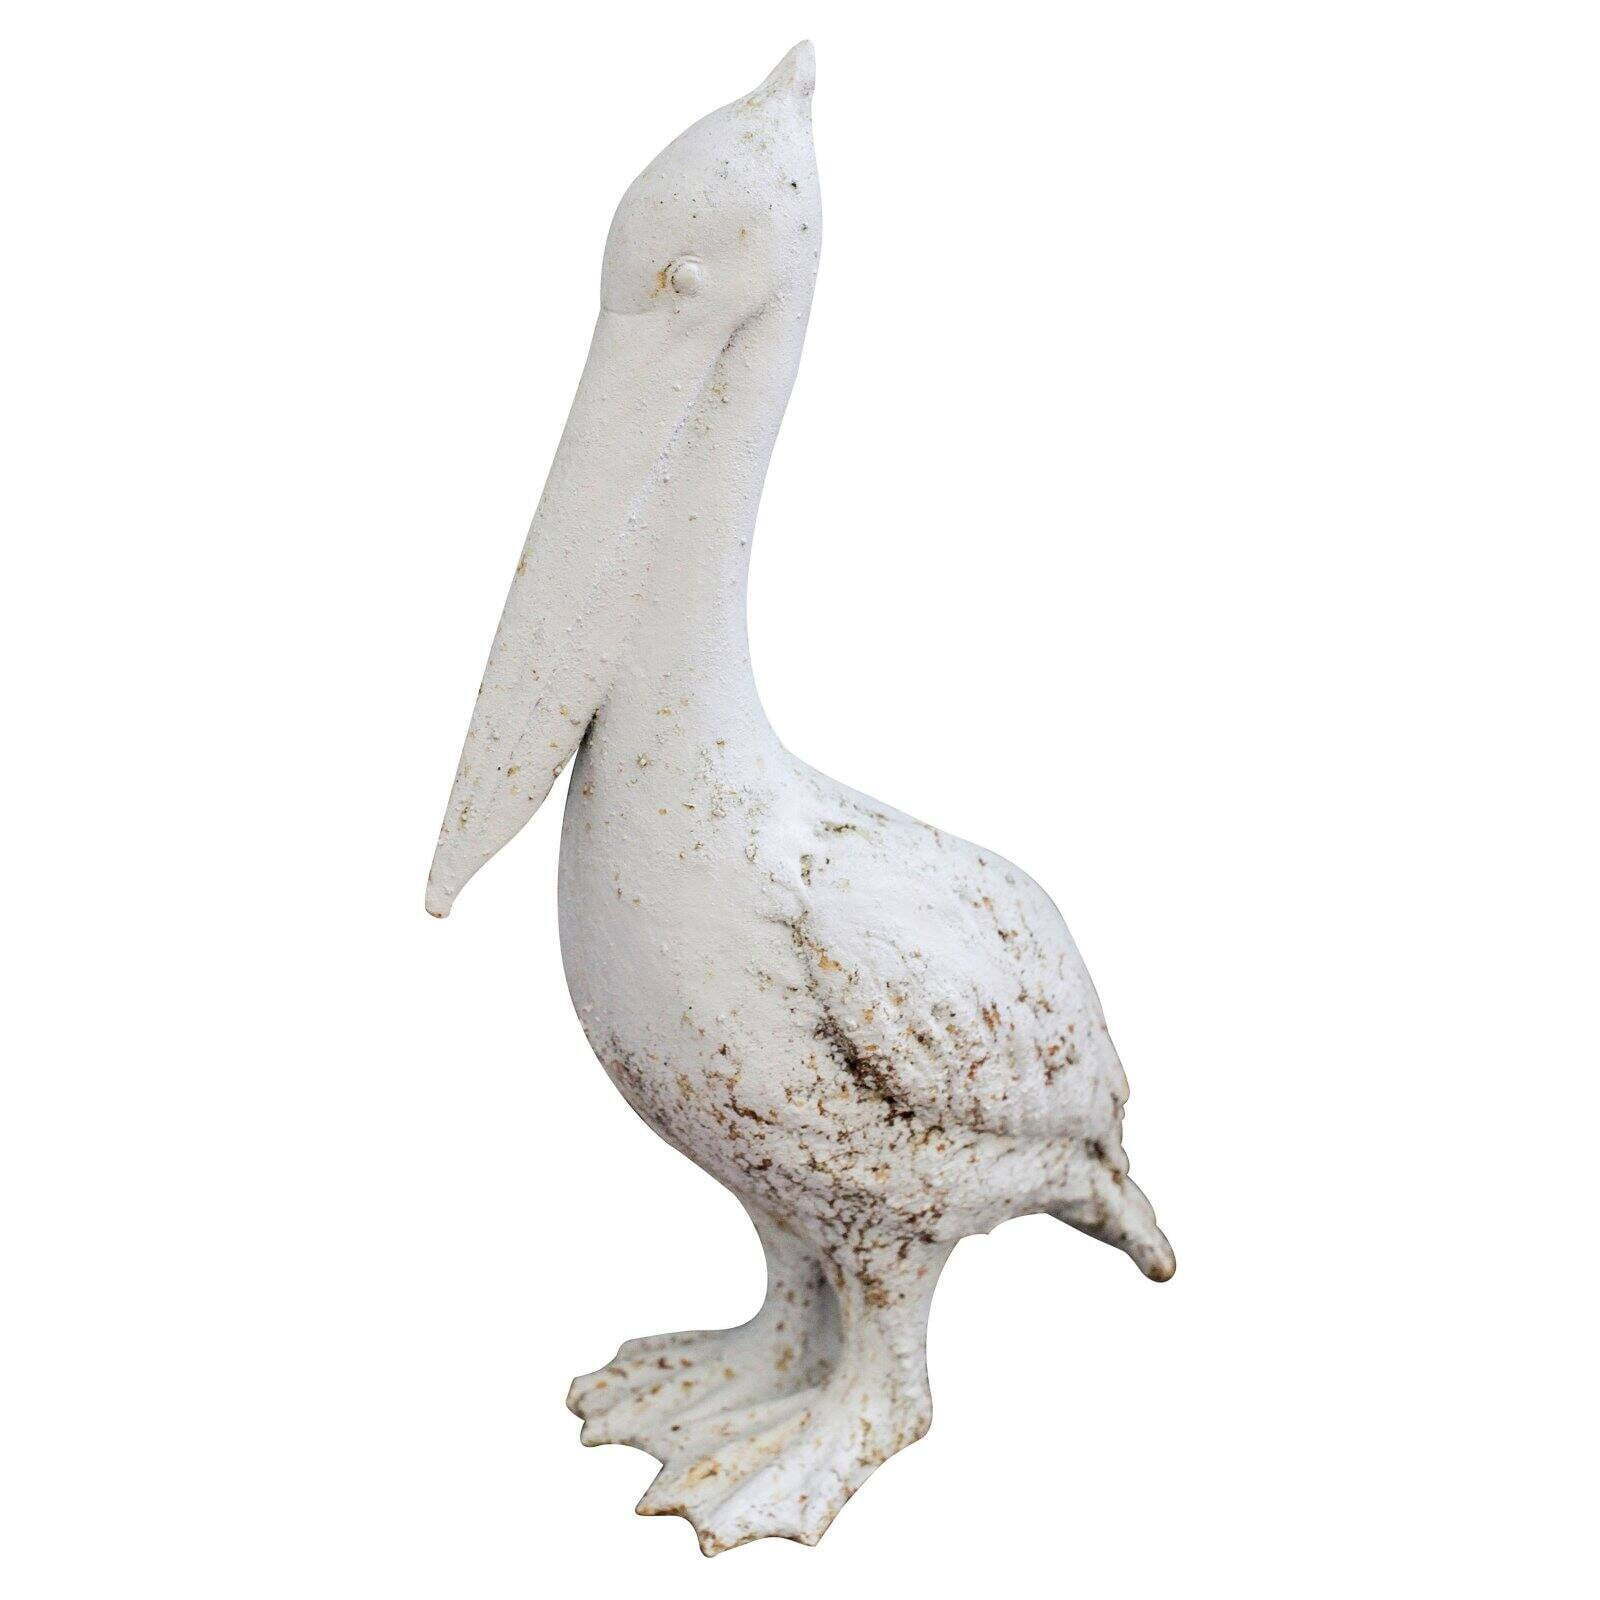 Pelican With Rust Sculpture,Coastal-inspired Pelican Design,Resin Construction